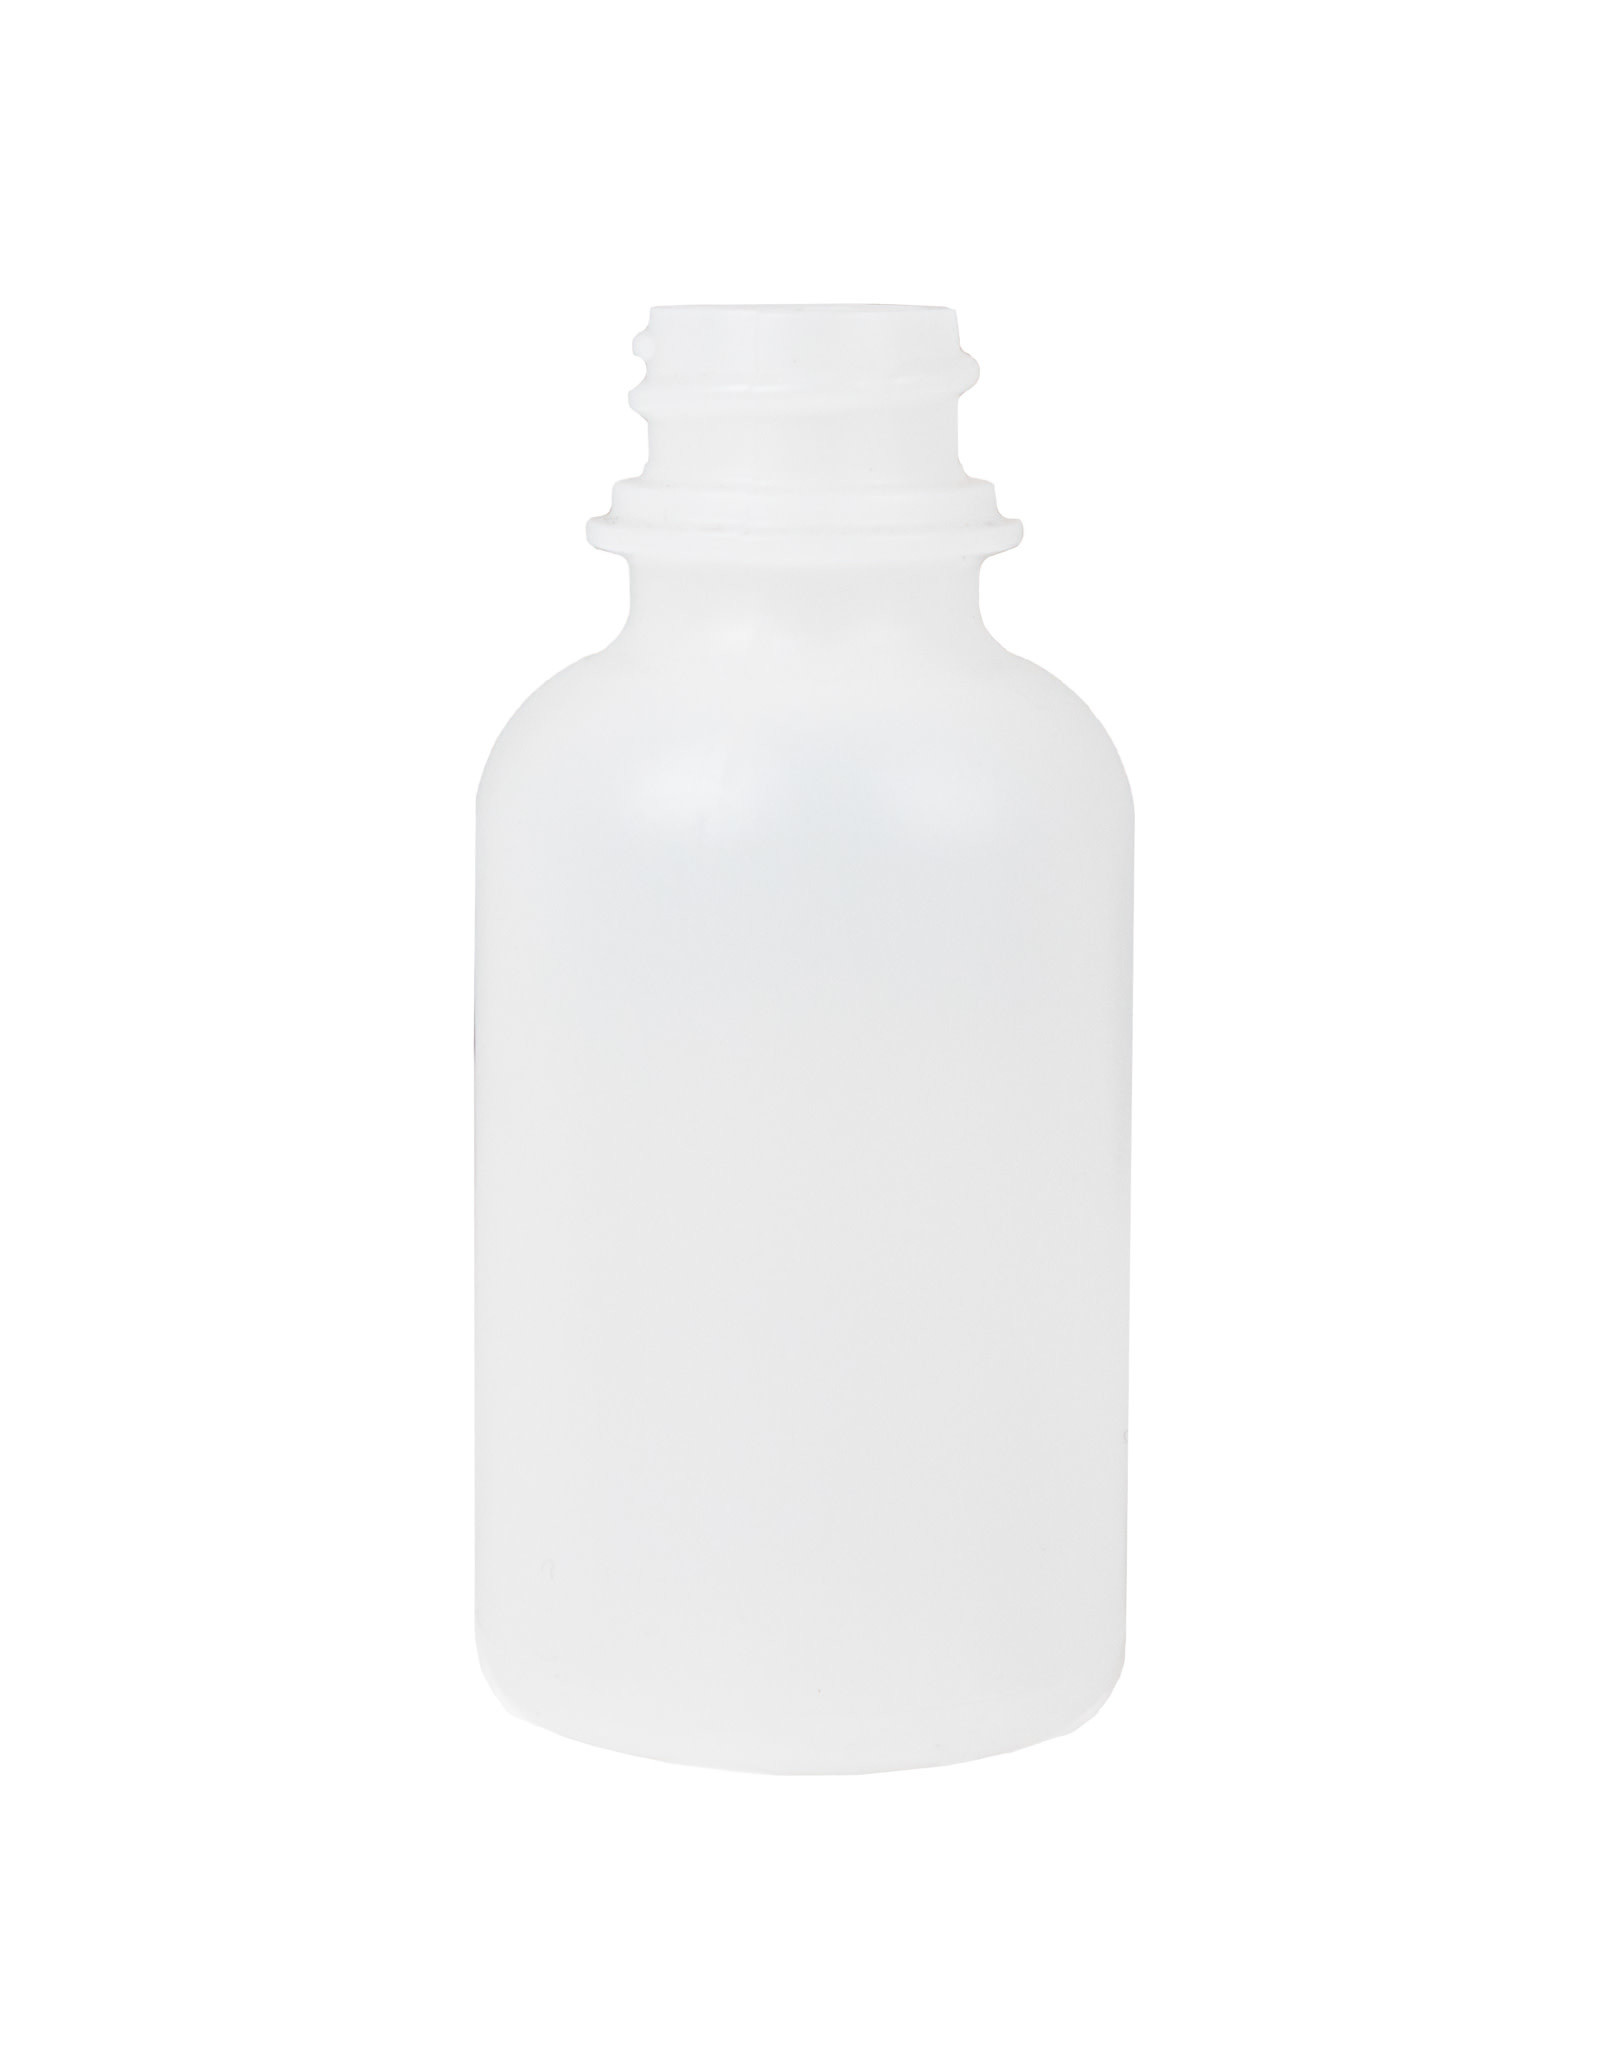 Chroma Dropper Bottle, 2oz, Empty